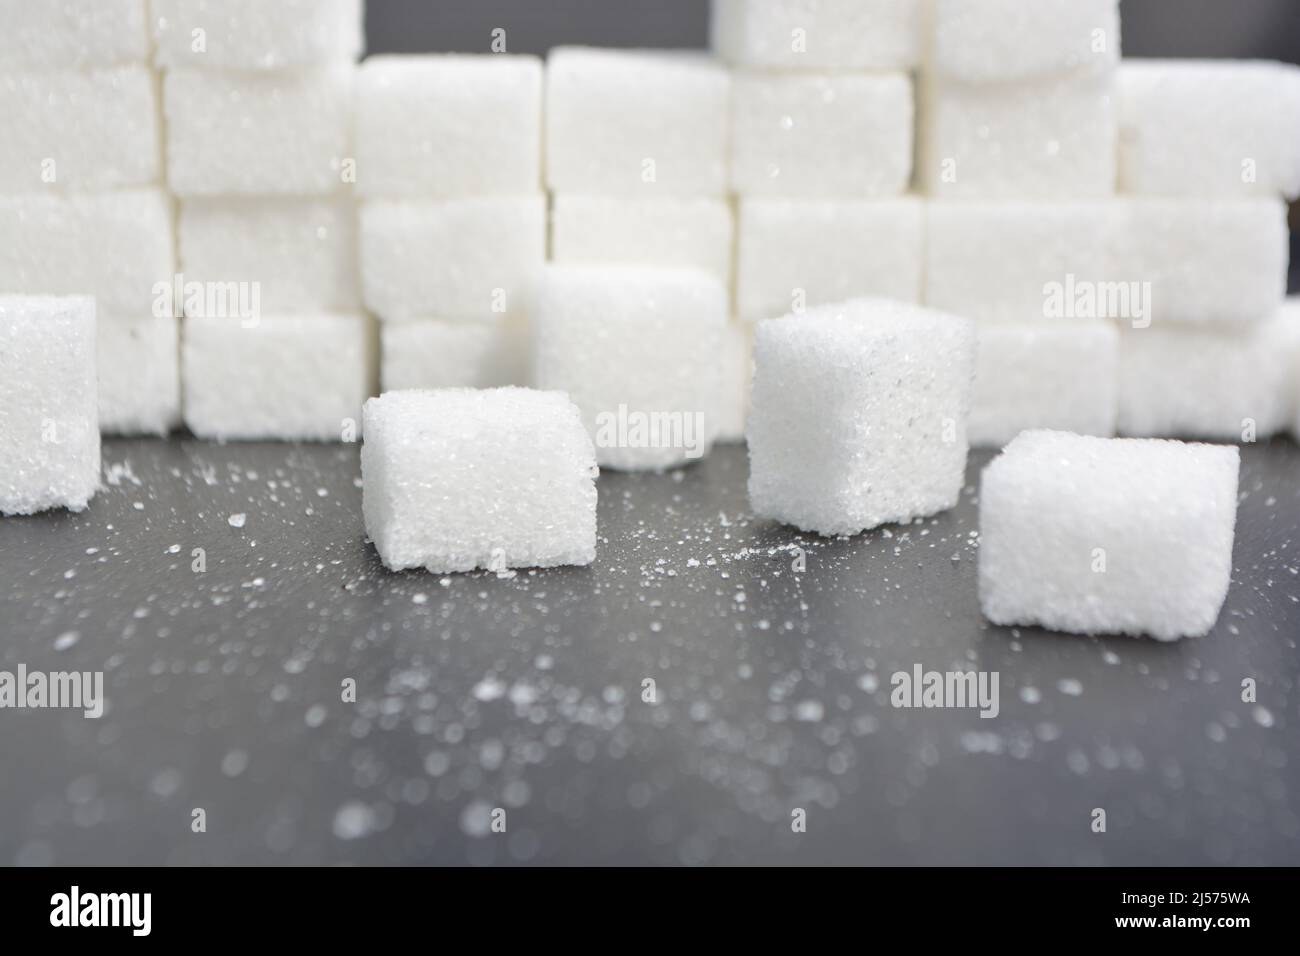 Passi fatti da cubetti di zucchero. Mucchio di cubetti di zucchero su una superficie grigia lucida, piramide di zucchero. Foto Stock